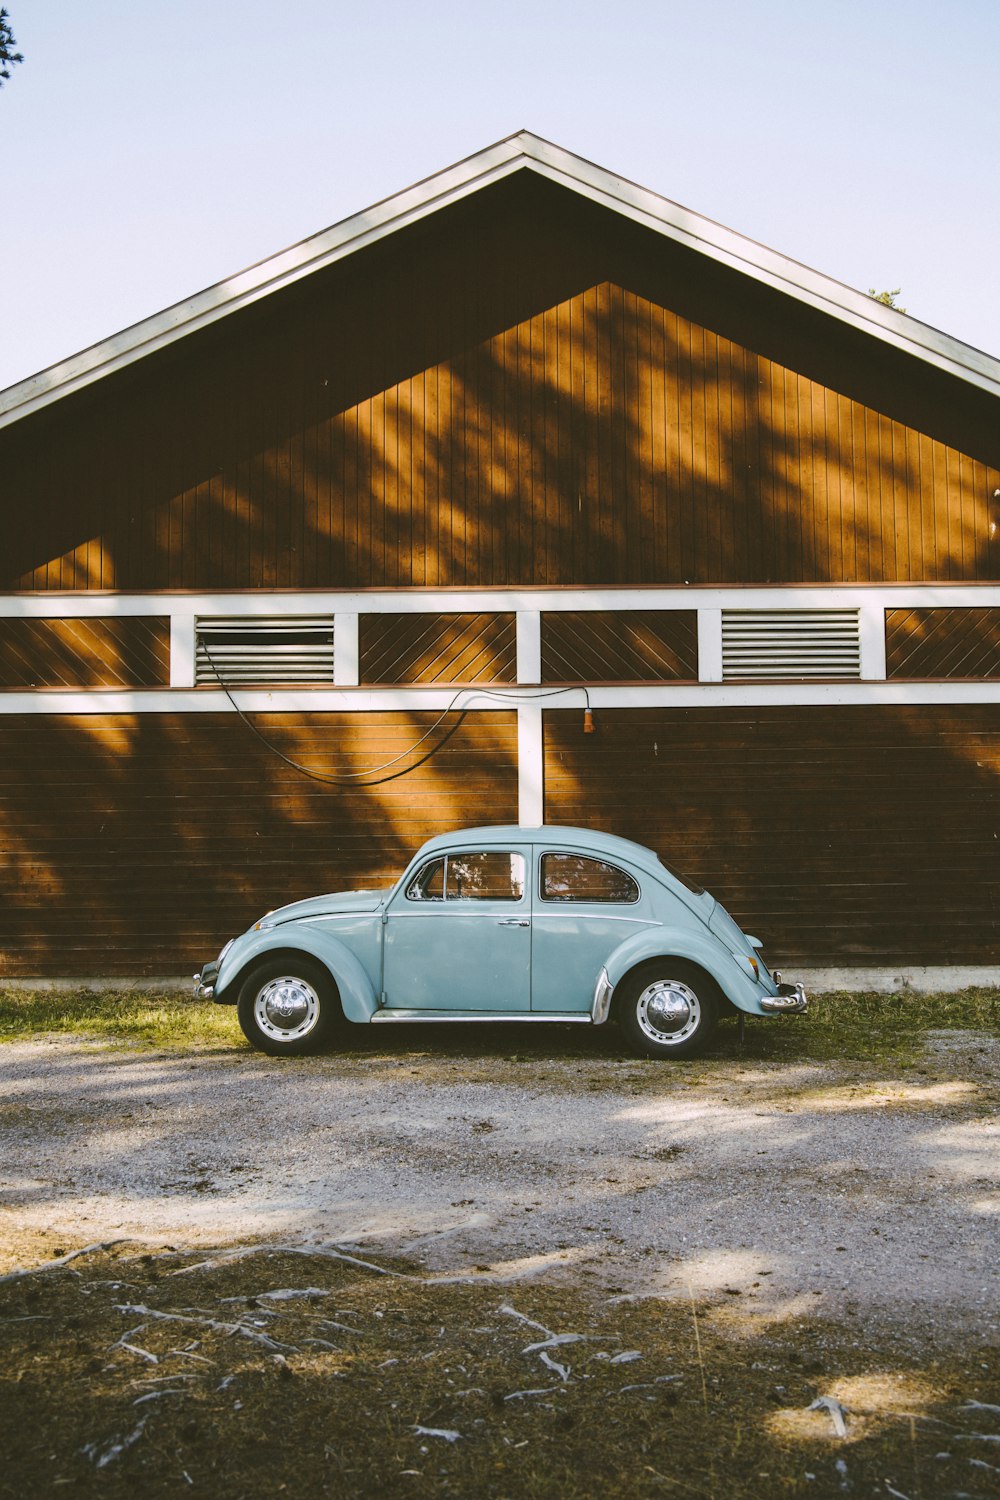 coupé blu Volkswagen Beetle accanto alla casa di legno